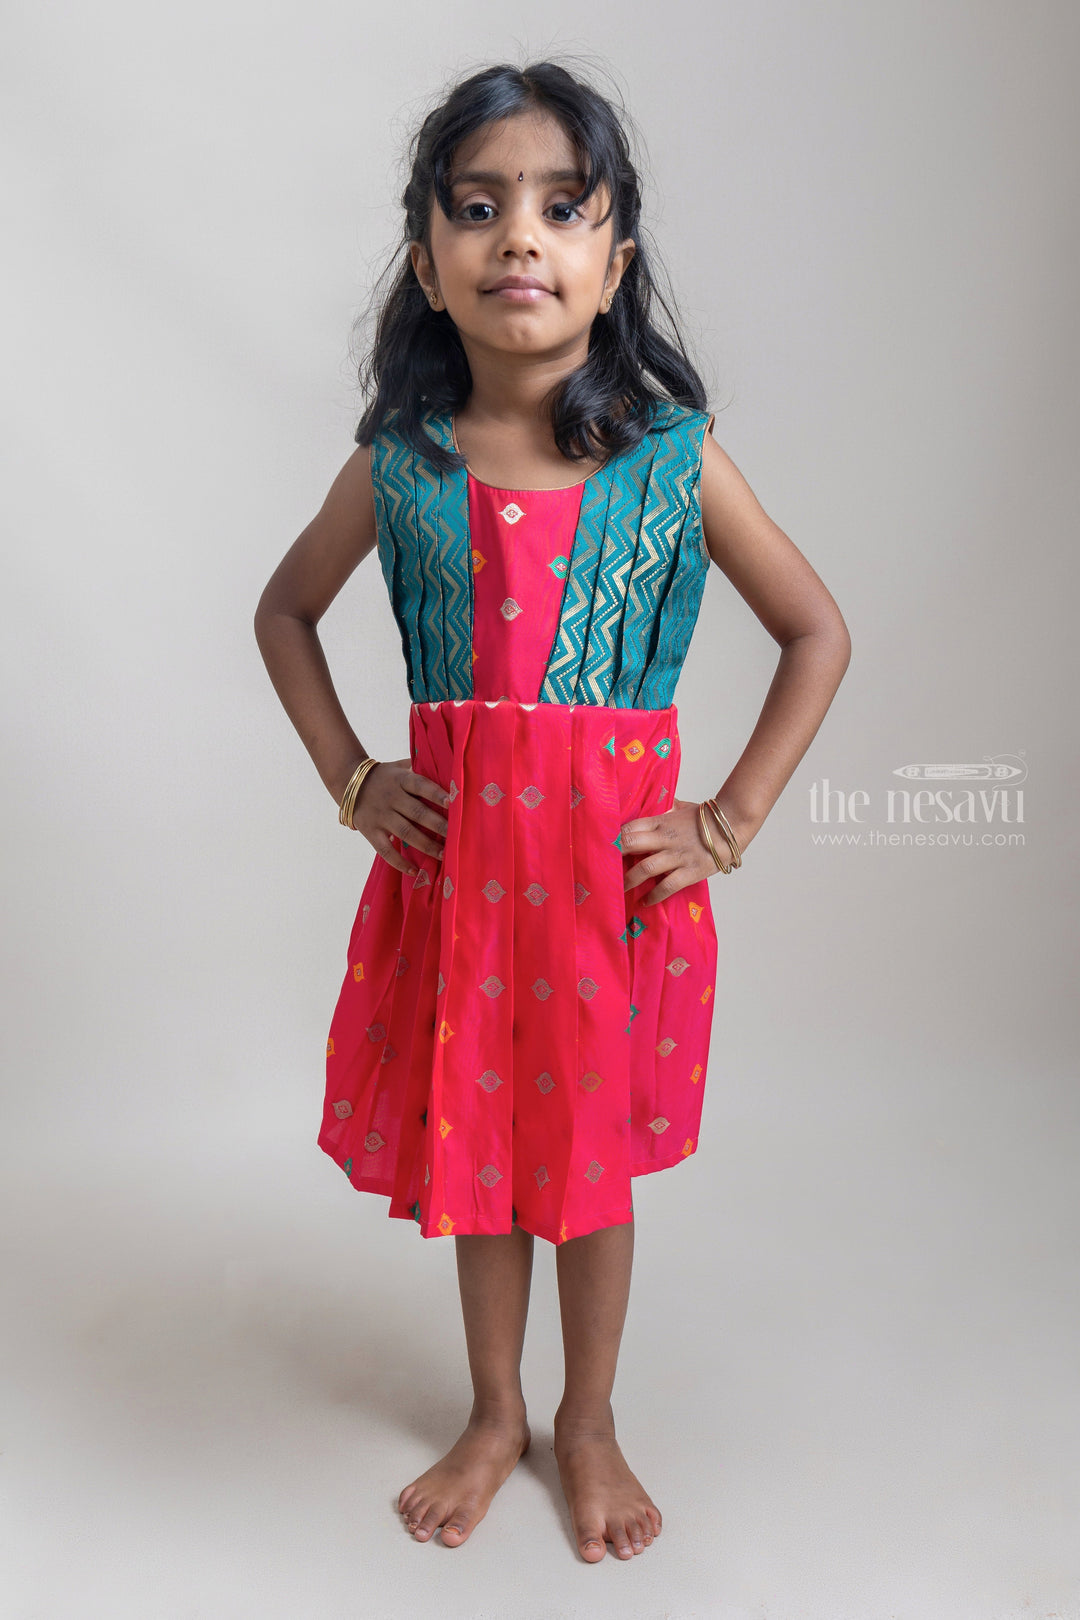 The Nesavu Silk Frock Alluring Green & Deeppink Butta Harmony Pleated Pattu Elegance for Young Fashionistas. Nesavu 14 (6M) / Red SF517B-14 Pink Semi-silk Frock For Girls | Latest silk wear Collection | The Nesavu